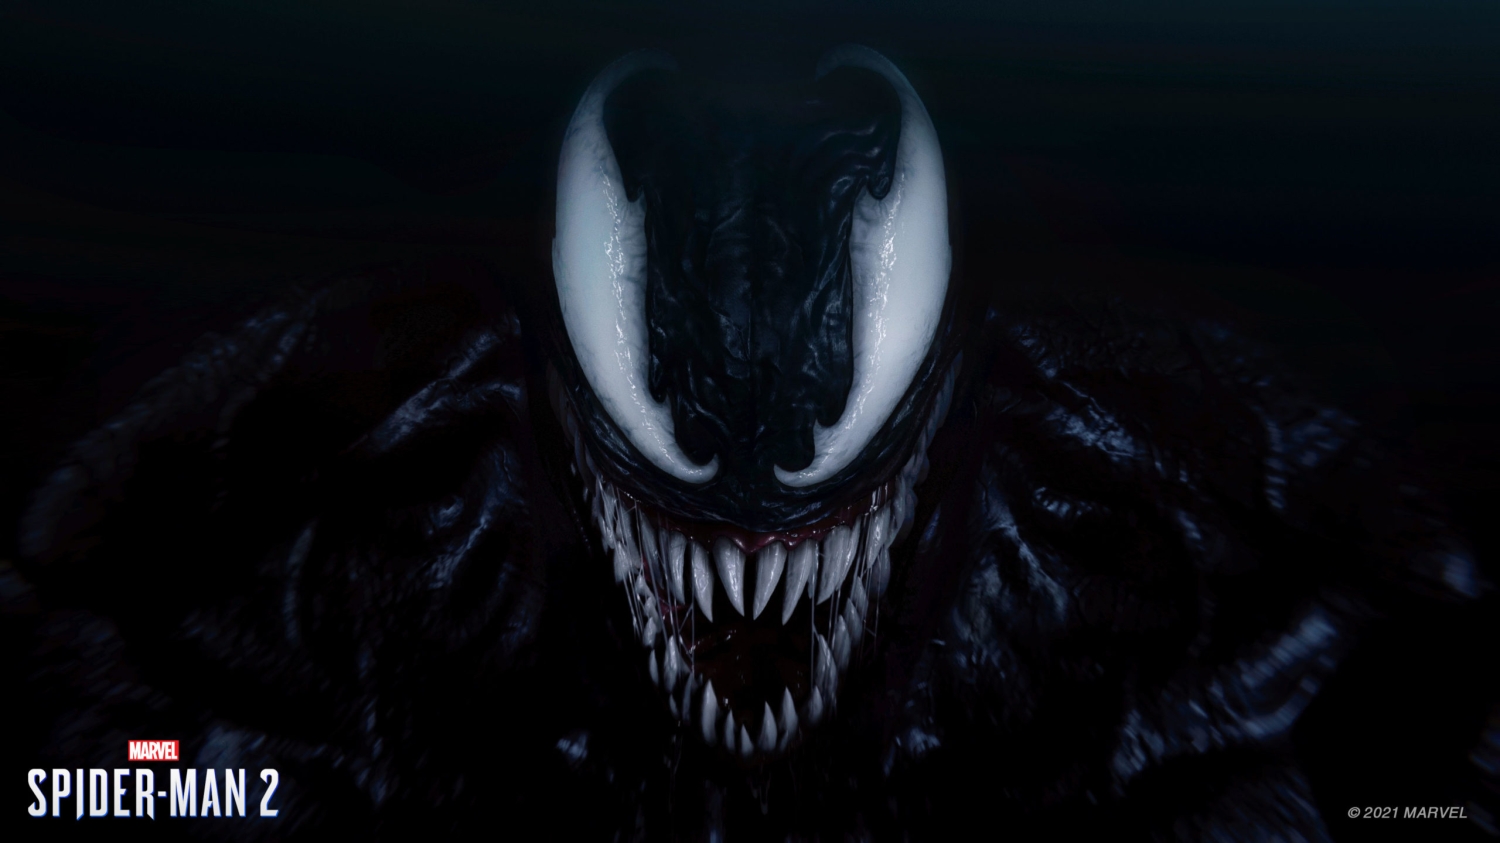 SpiderMan 2 release date announced alongside new Venom details